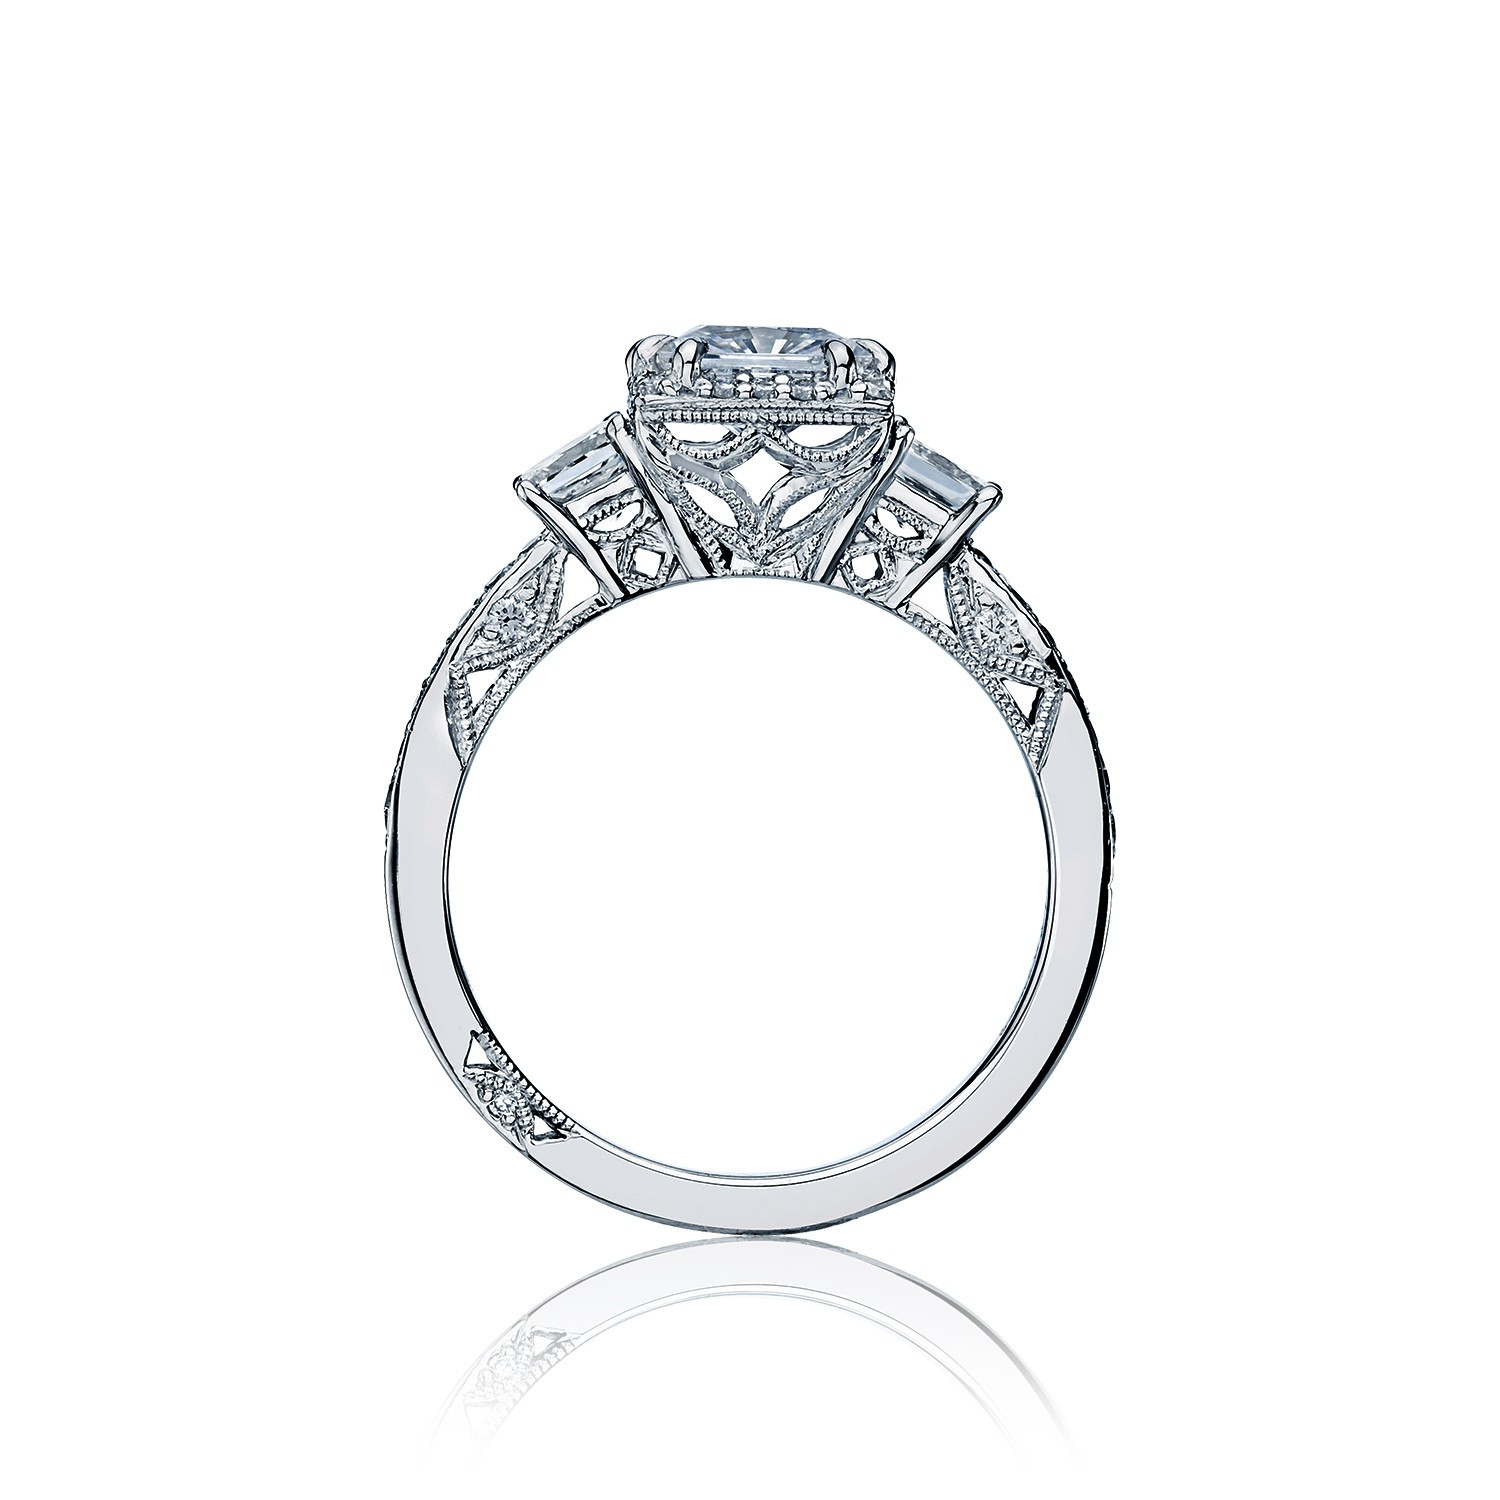 Tacori Princess Cut Engagement Rings
 Tacori "Dantela" 18KT White Gold Princess Cut Diamond